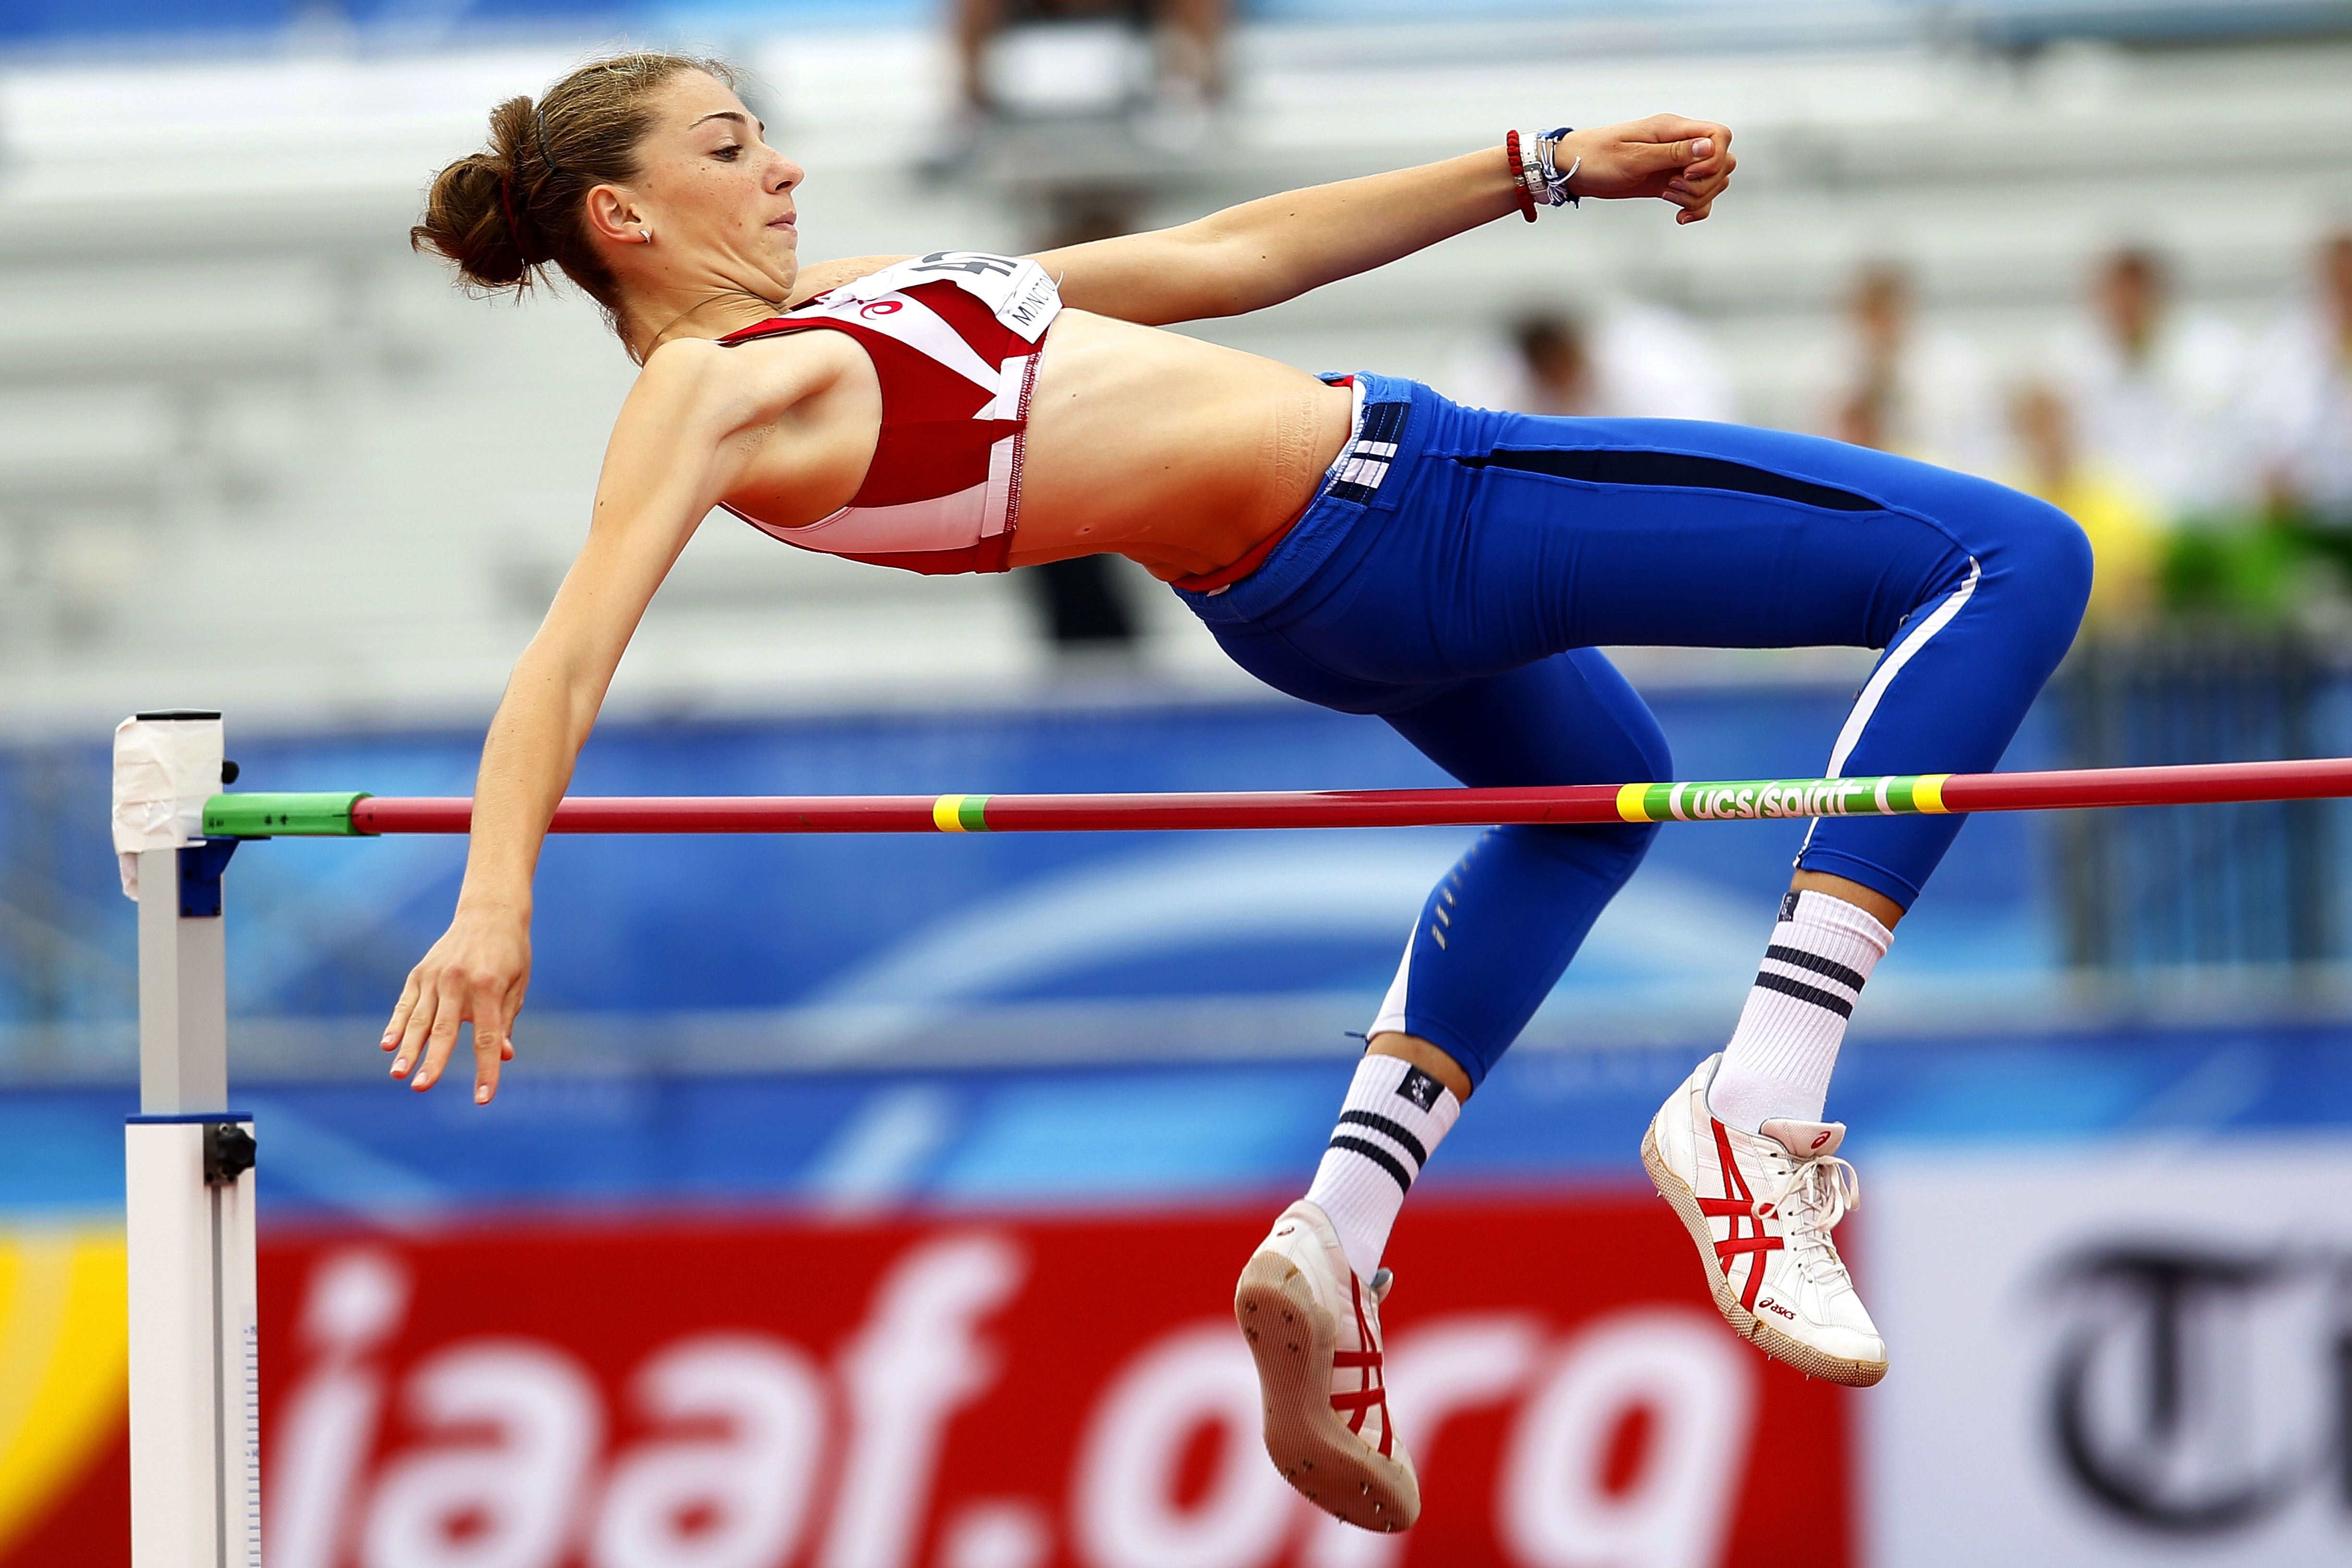 Marija Vukovic in the high jump at the 2010 World Junior Championships